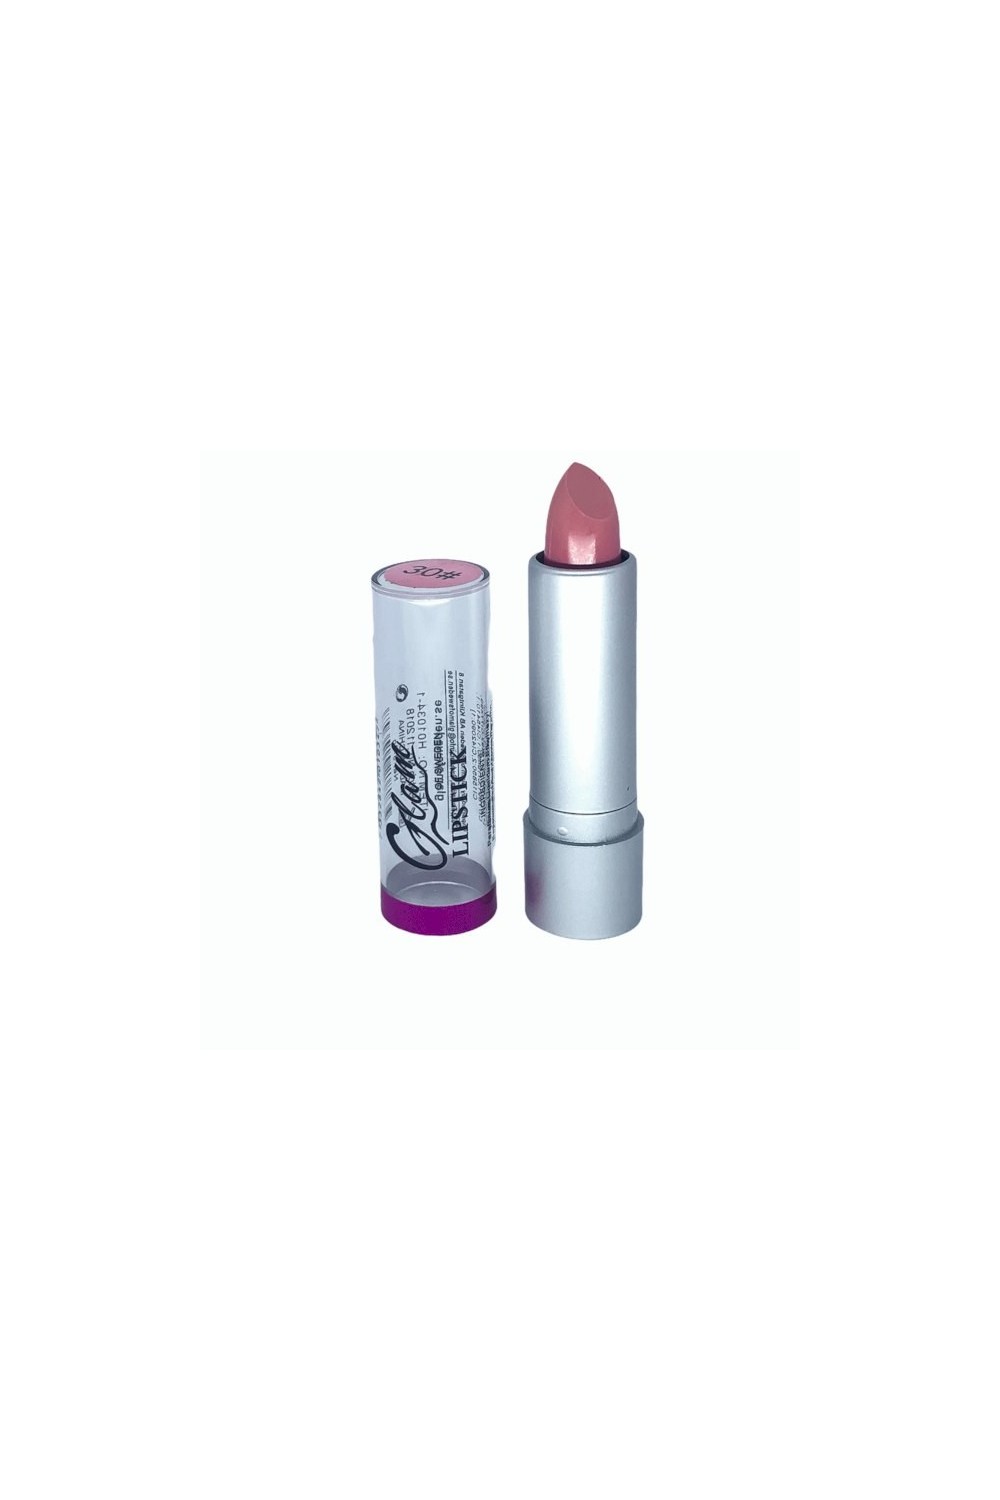 Glam Of Sweden Silver Lipstick 30-Rose 3,8g